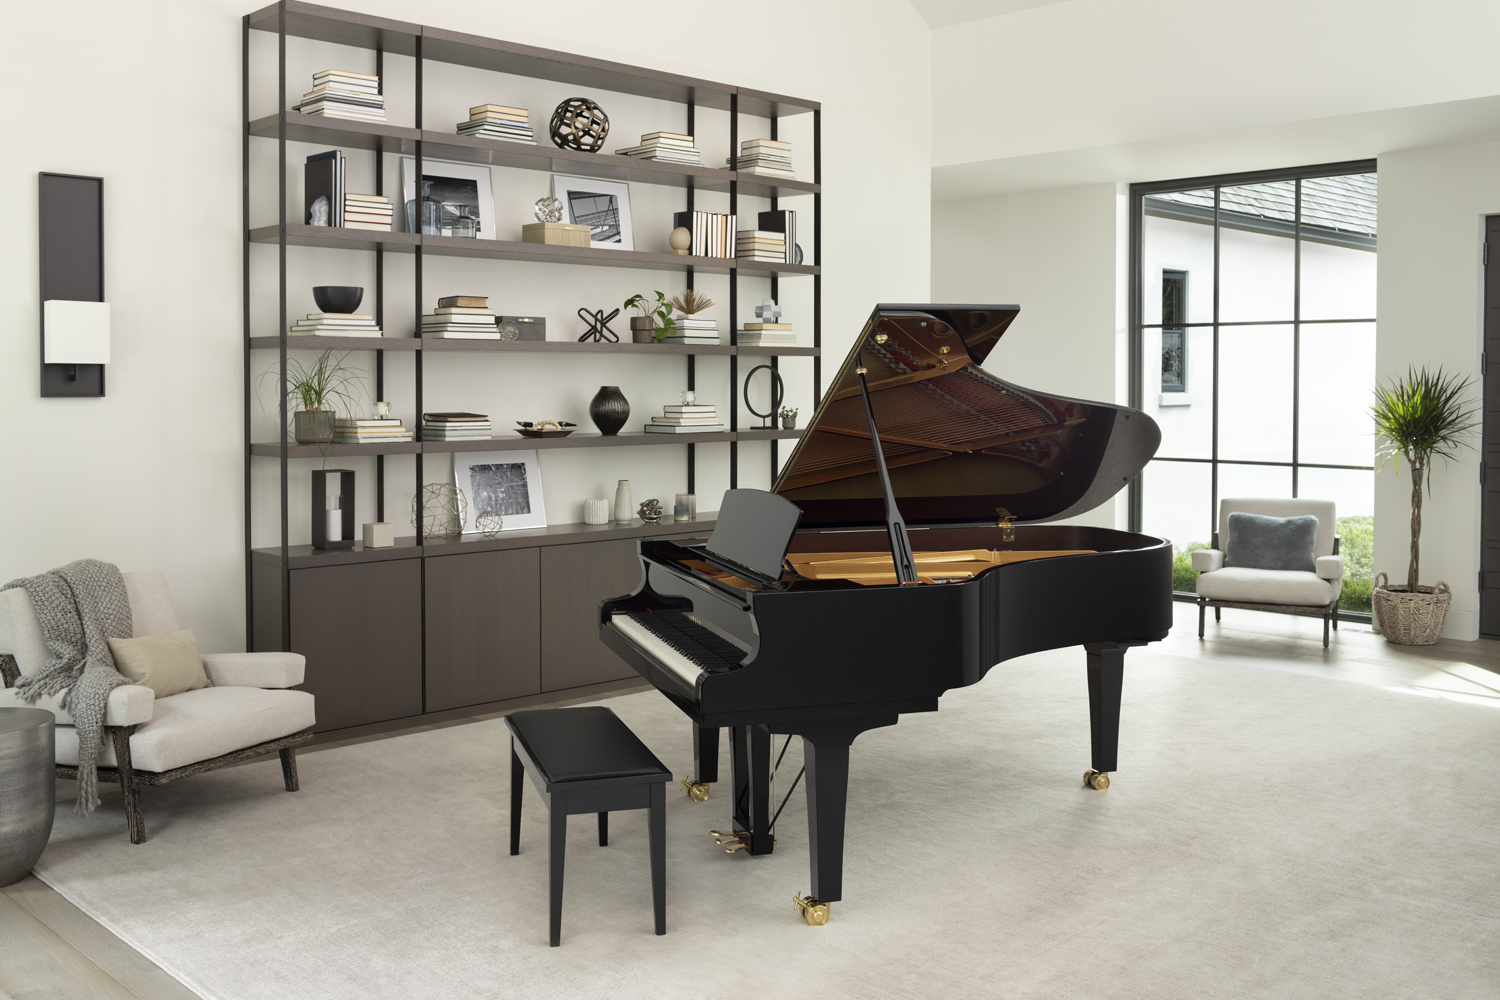 SX Series piano in a nice cozy livingroom